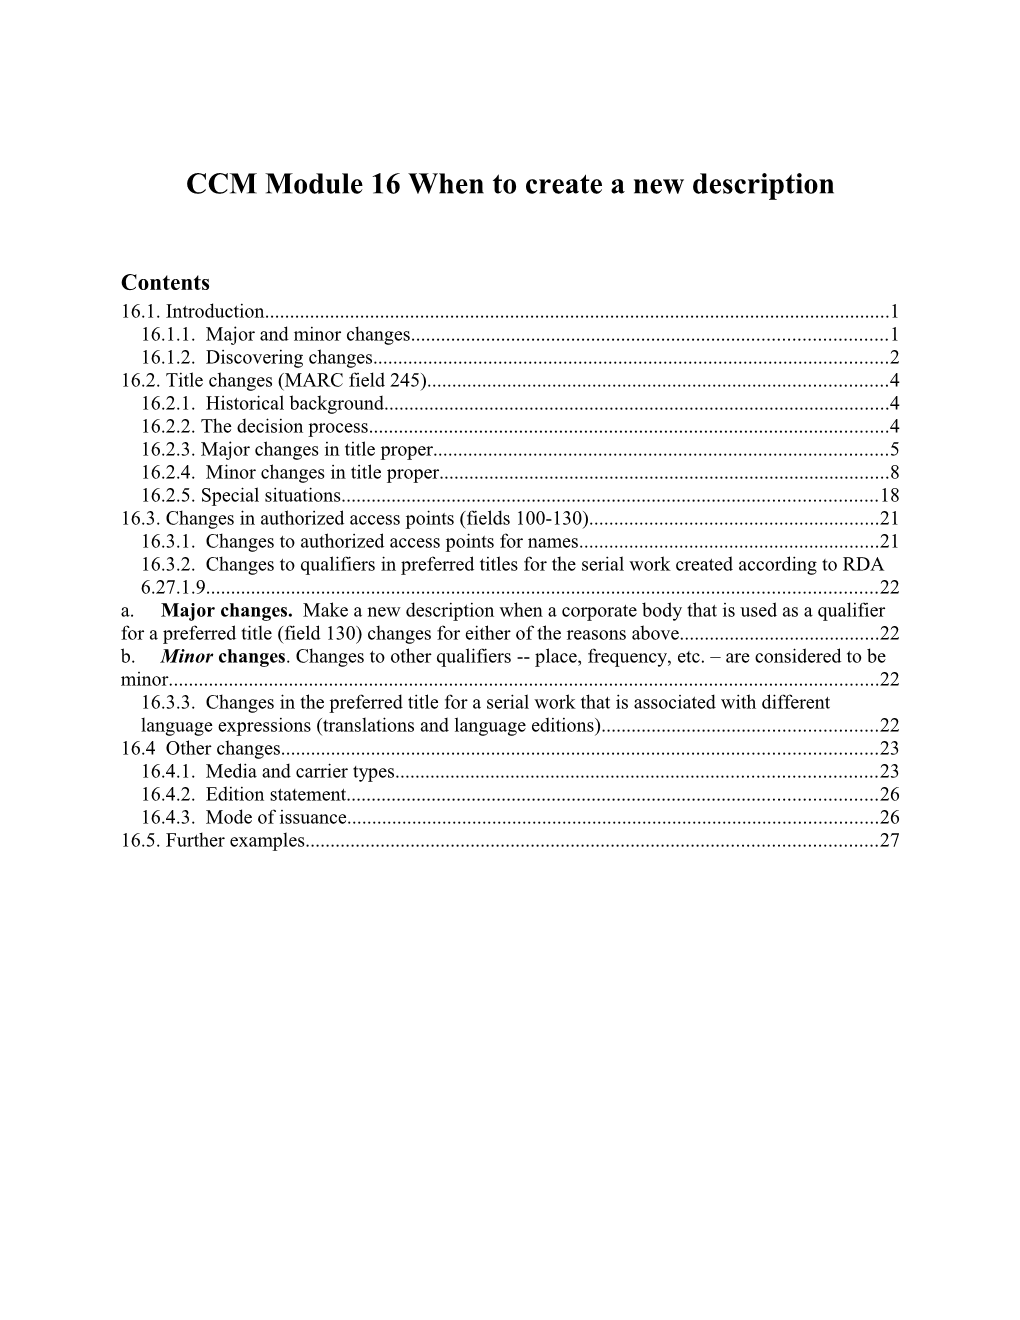 CCM Module 16 When to Create a New Description